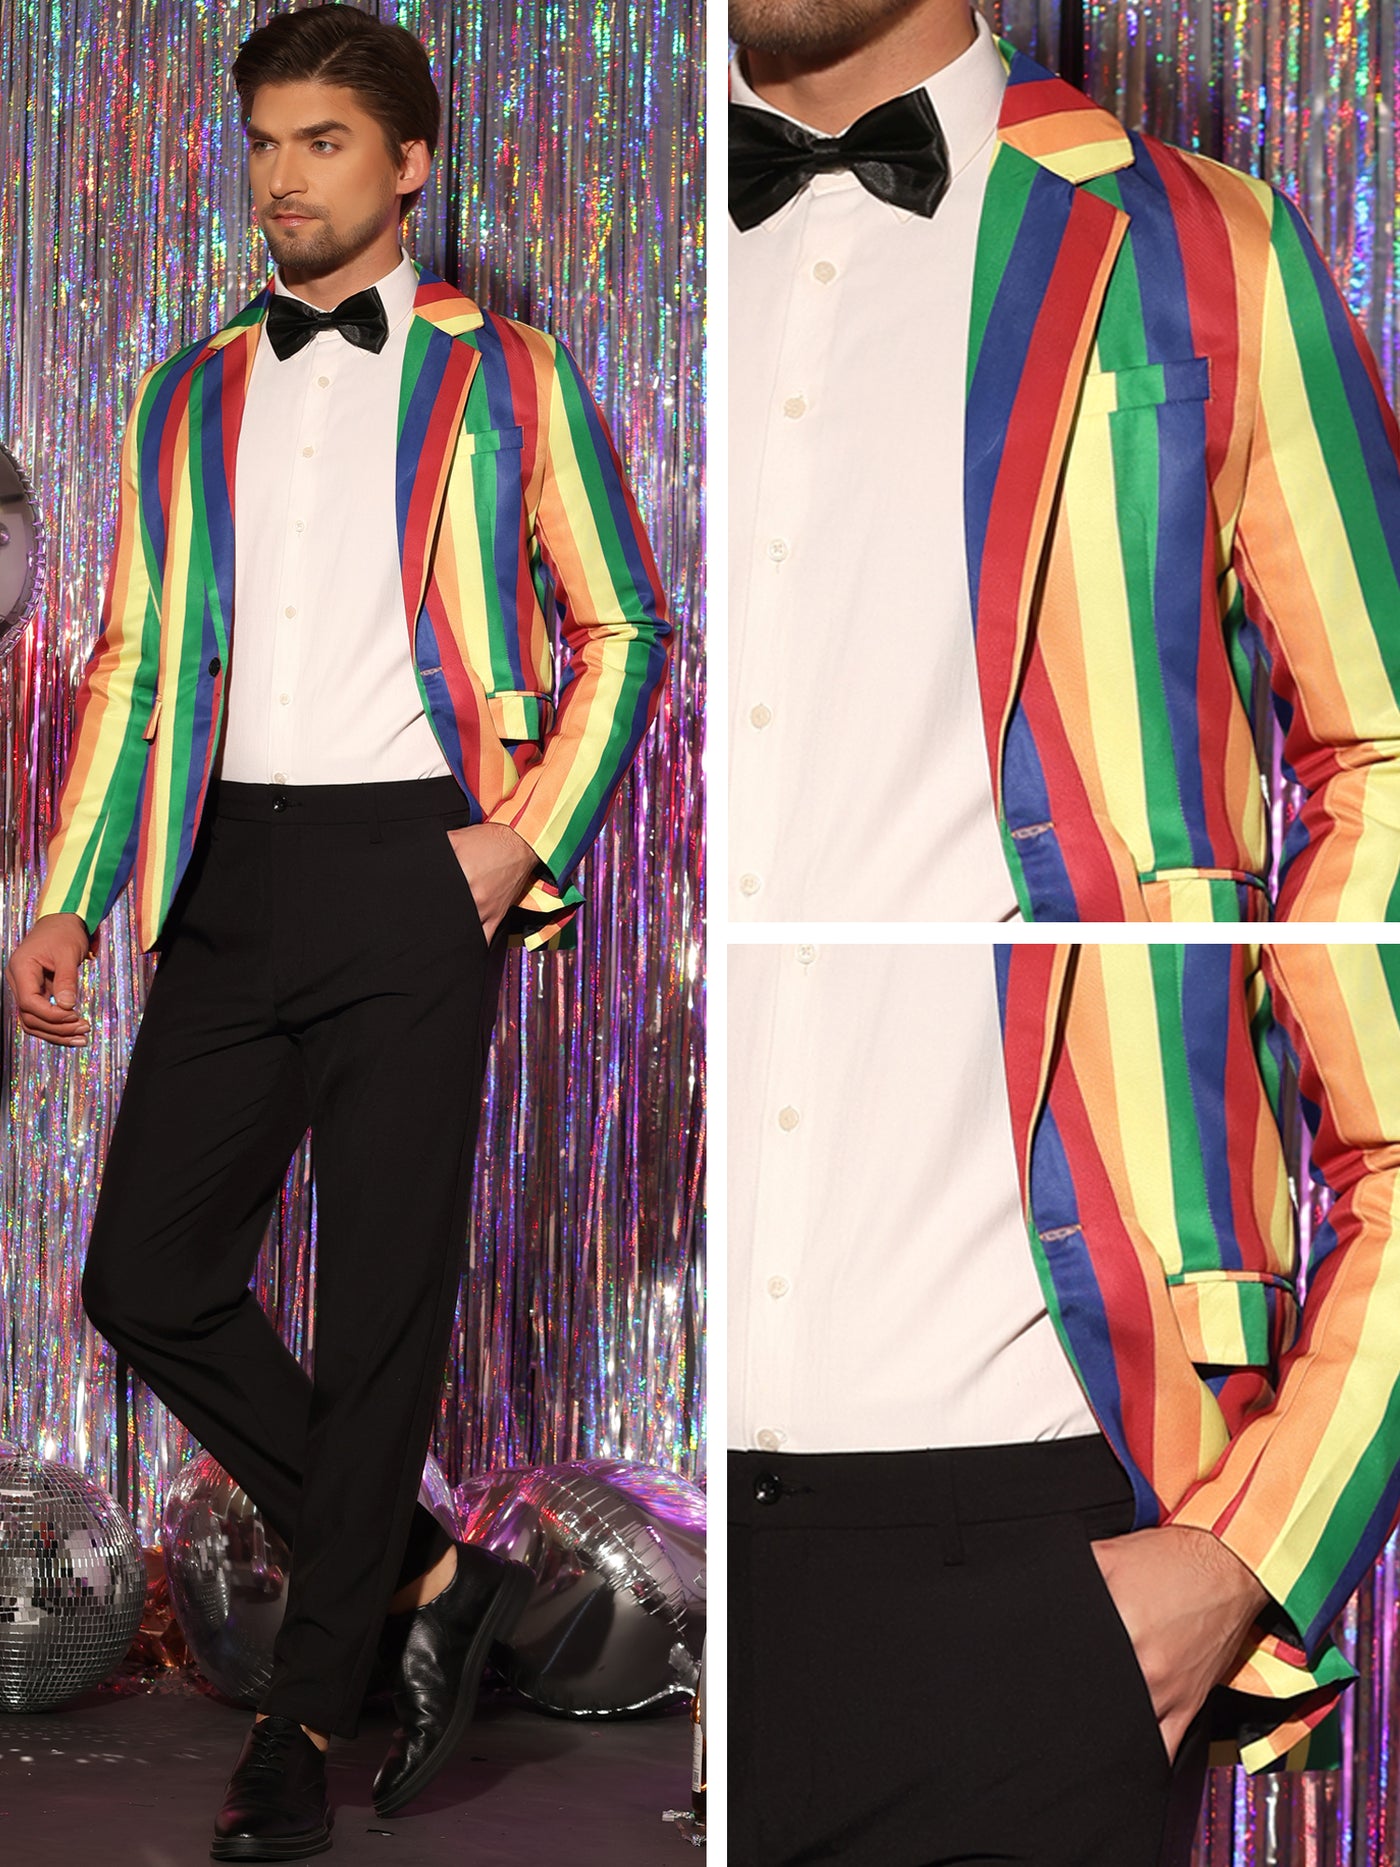 Bublédon Men's Rainbow Striped Notch Lapel Prom Party Blazer Sports Coat Suit Jacket